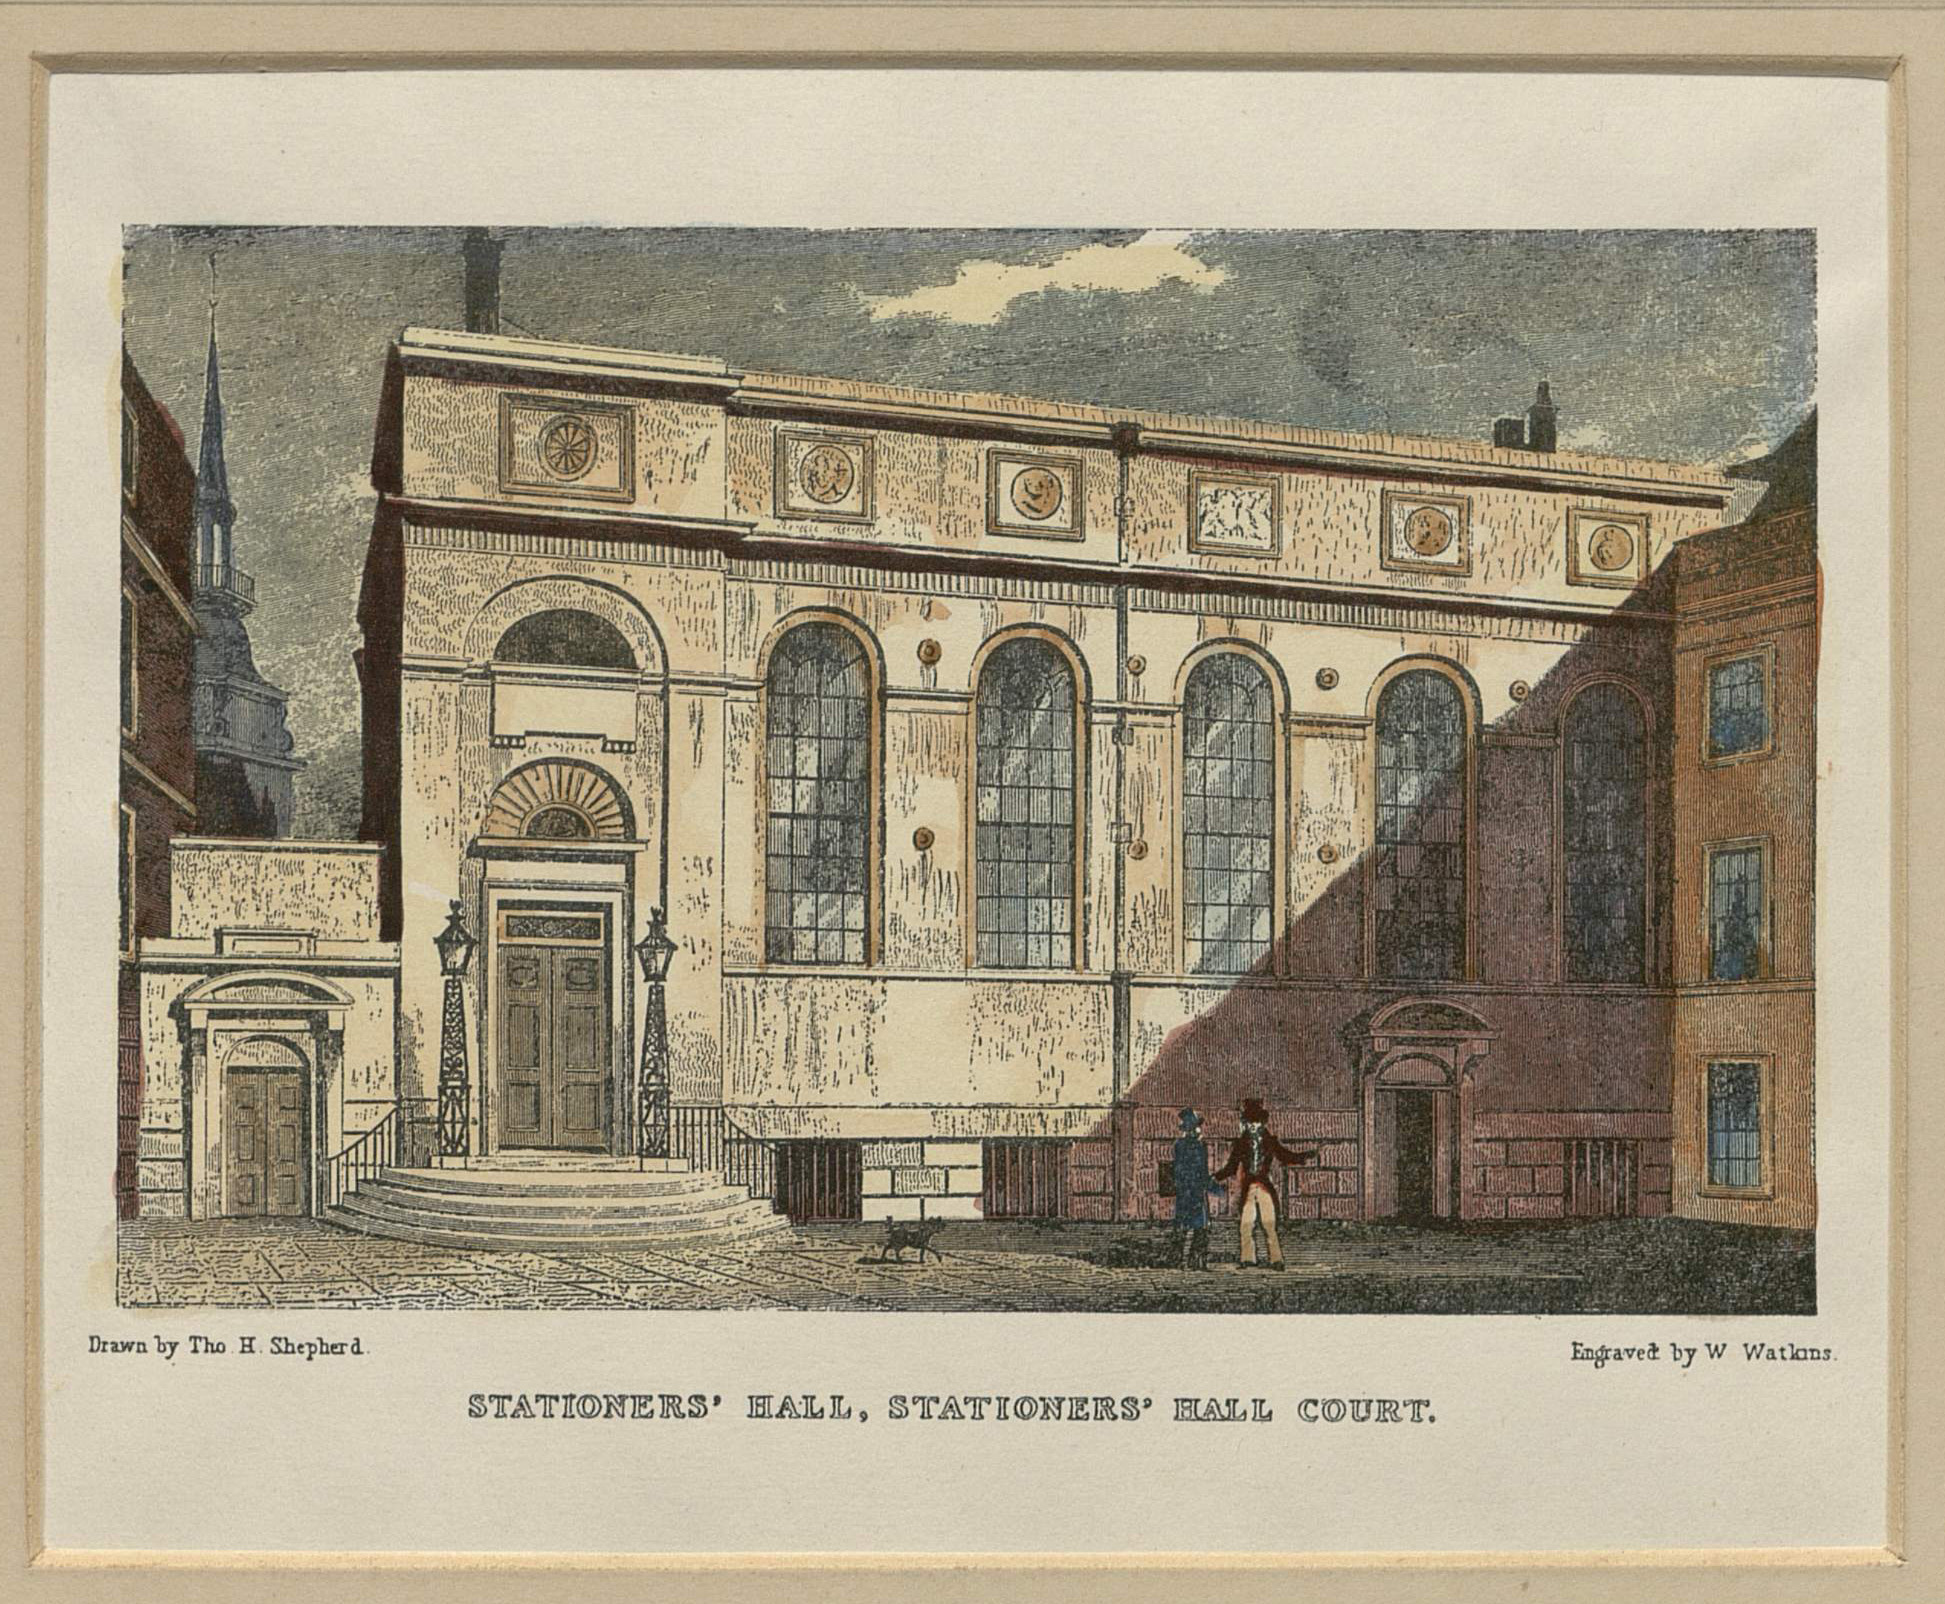 Stationers' Hall